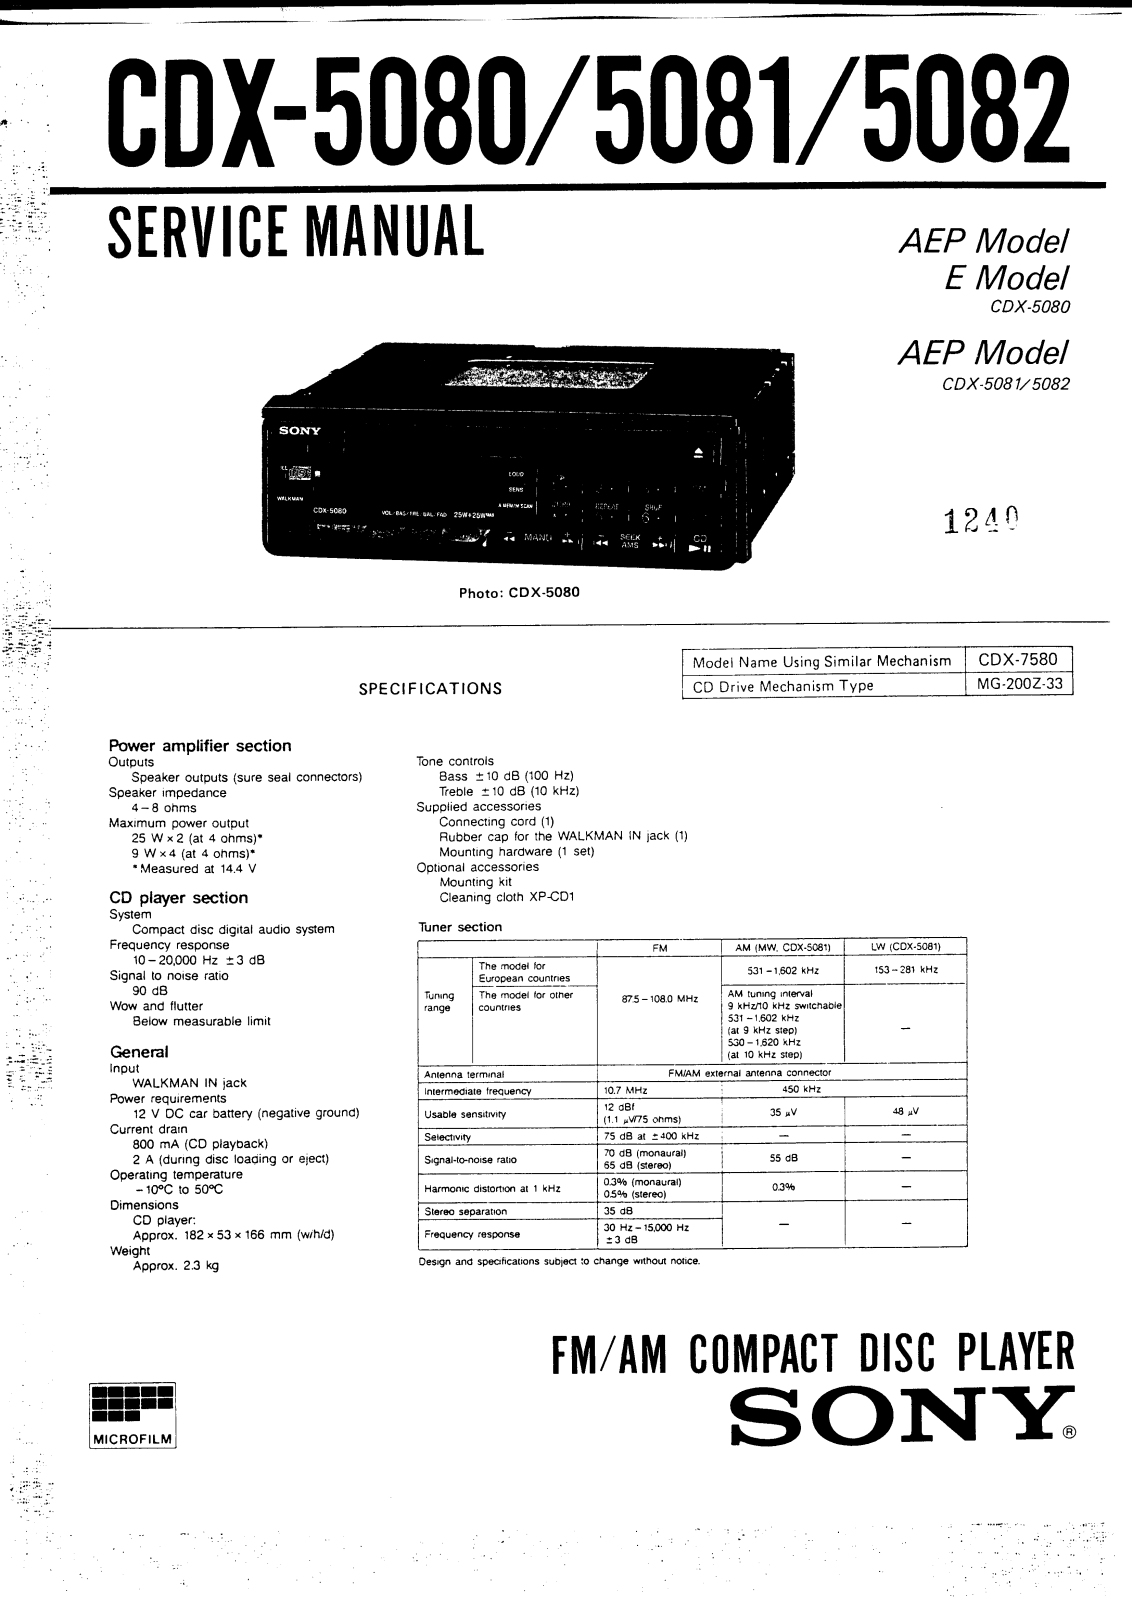 Sony CDX-5080, CDX-5081, CDX-5082 Service manual